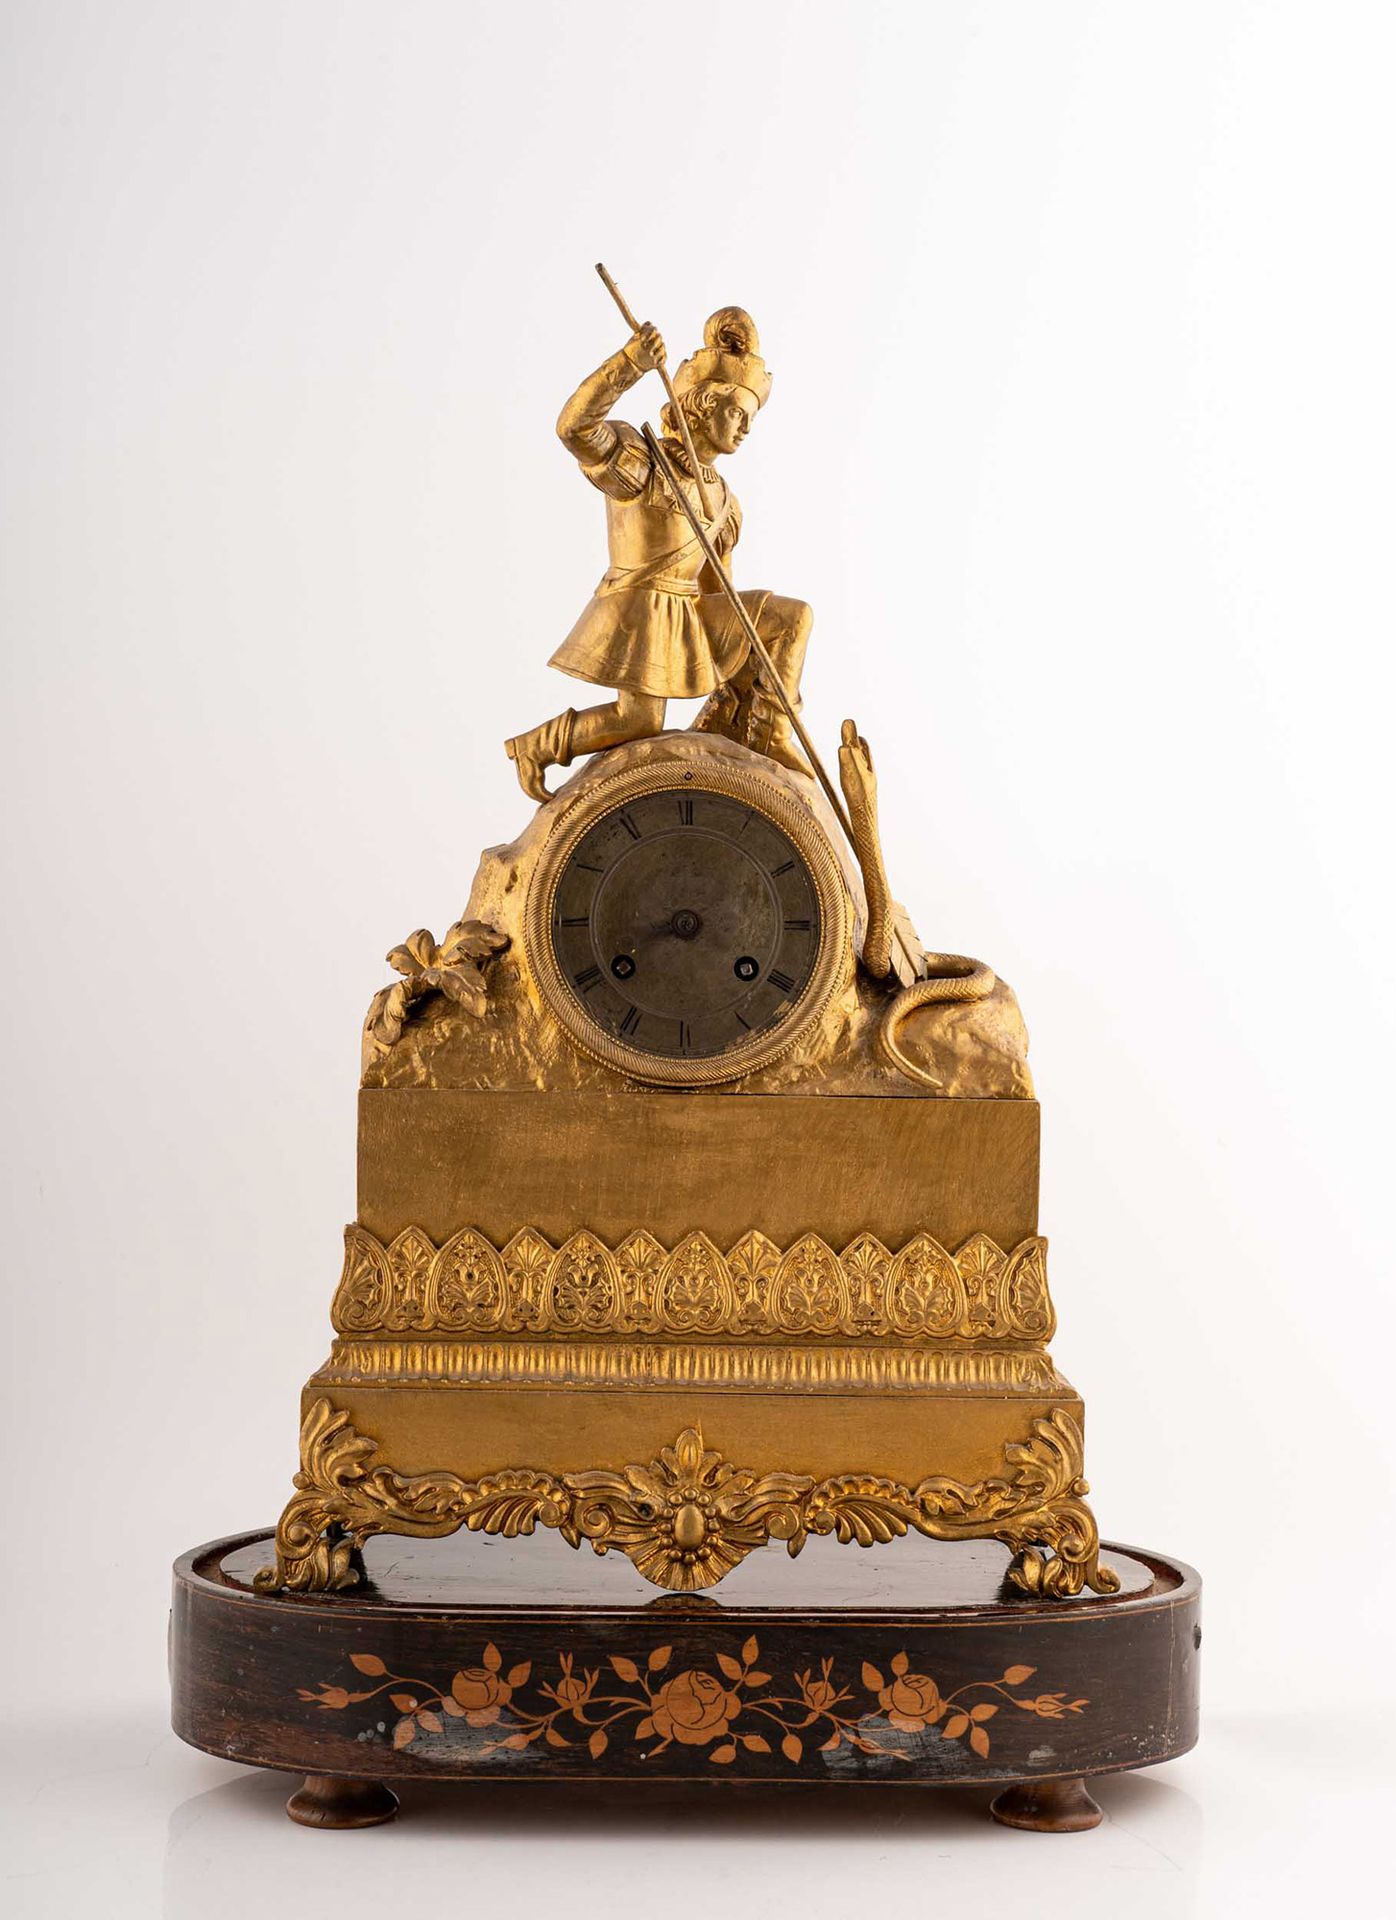 Null 装饰品时钟

法国 19世纪末

鍍金金屬，橢圓形桃花心木底座，缺失，沒有玻璃鈴聲

高37厘米